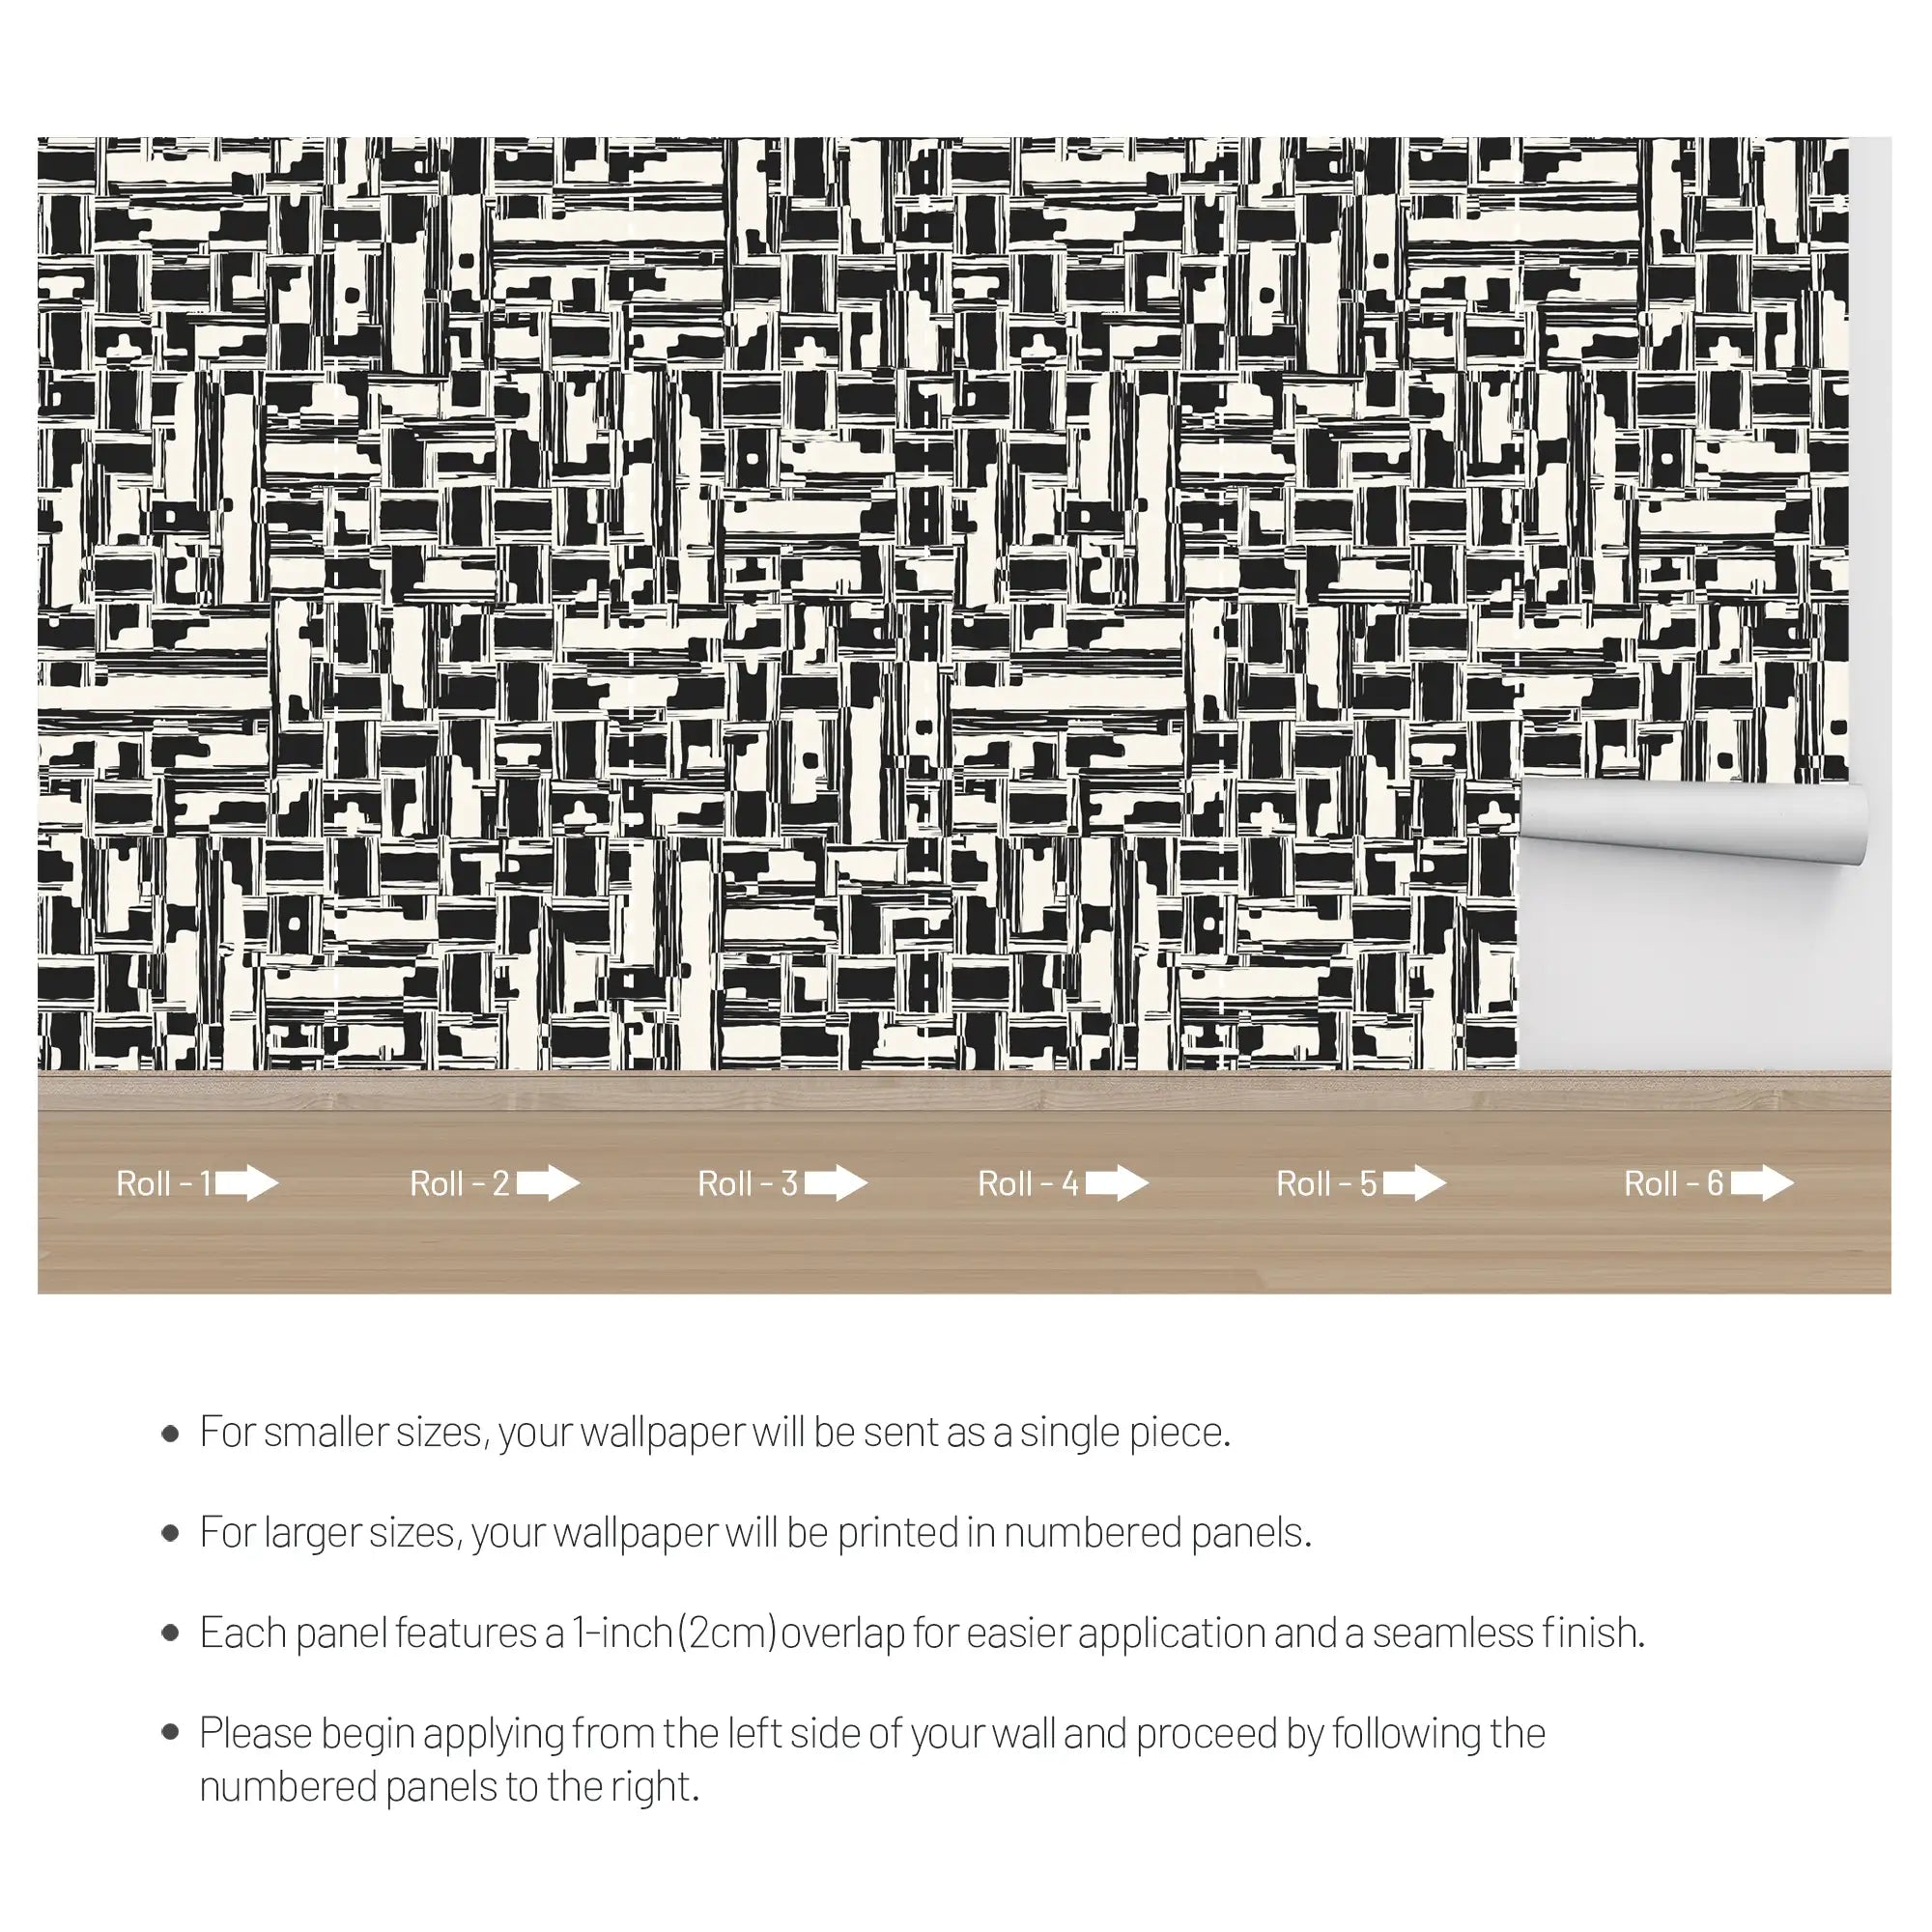 3221 / Modern Geometric Peel and Stick Wallpaper - Deconstructivist Fragmentation, Easy Install for Trendy Home Spaces - Artevella